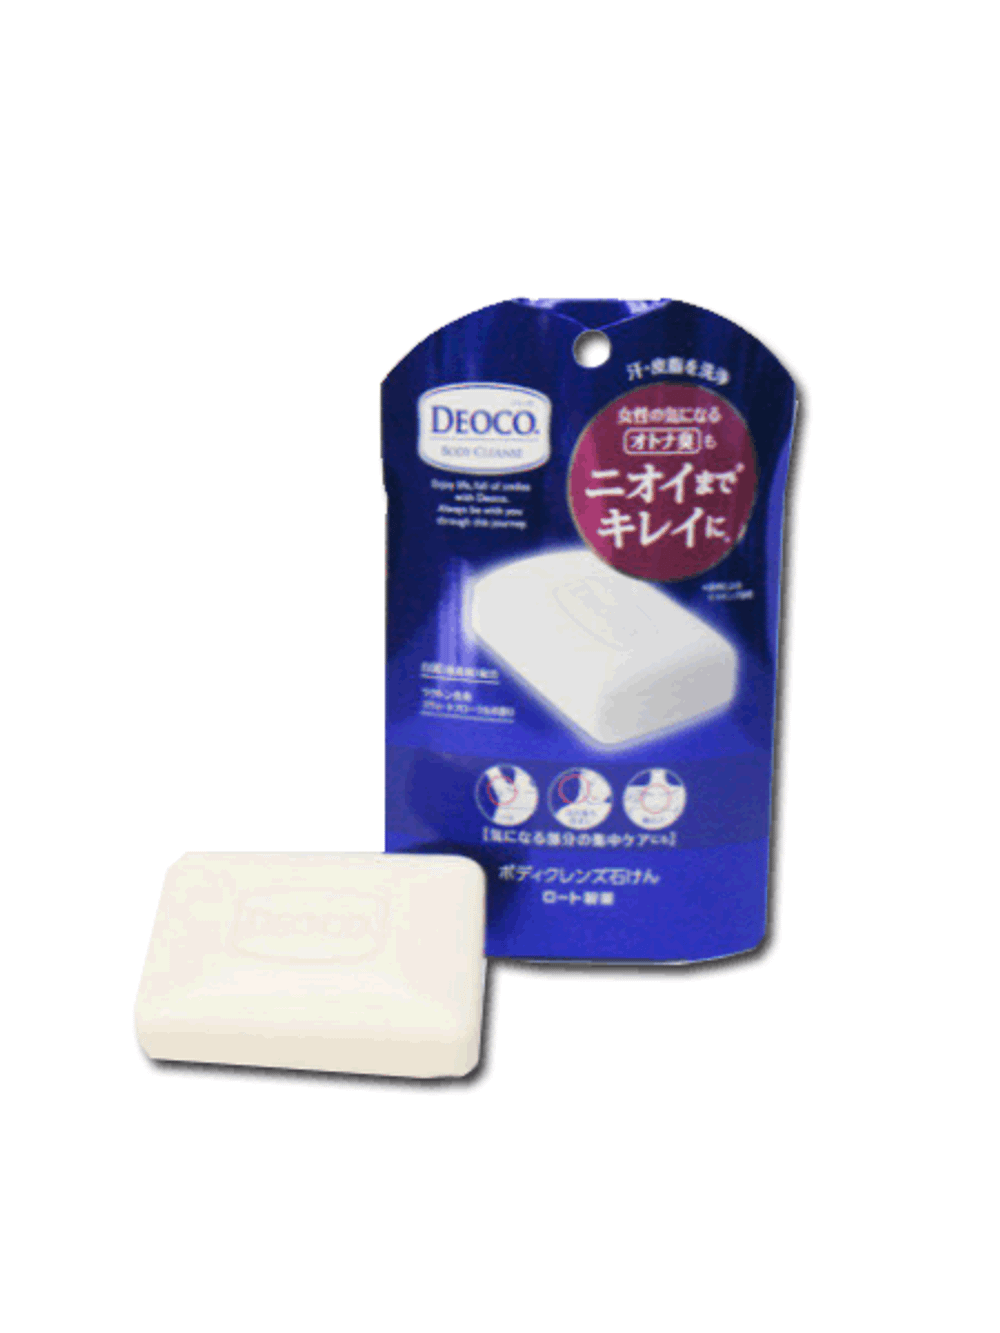 Бактерицидное мыло для тела против запахов  Rohto Deoco Body Cleanse 75 г